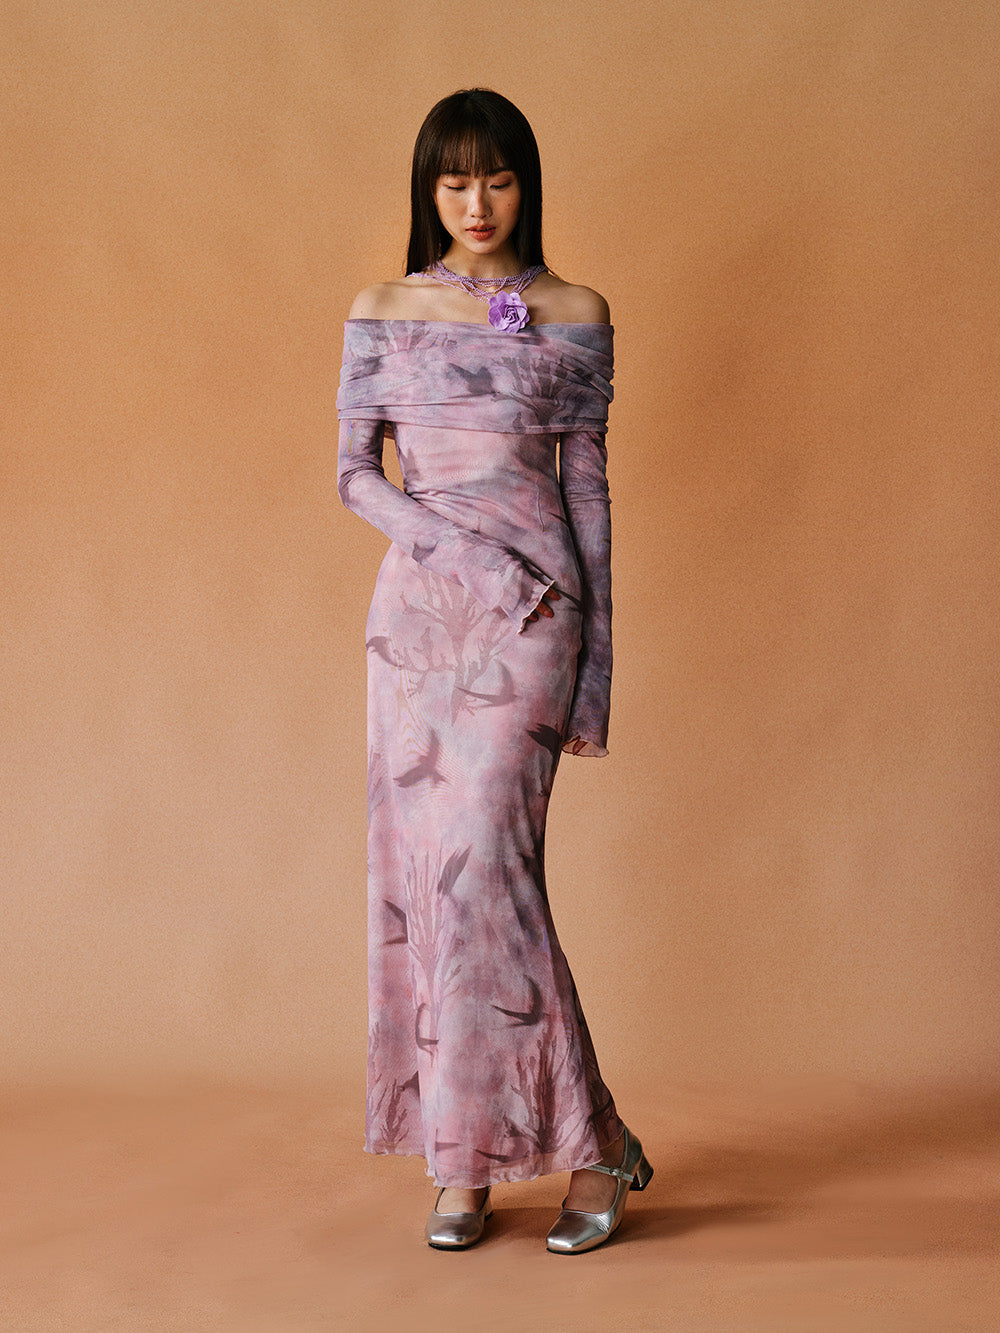 LOUMUTAKU x MUKTANK Vintage-Style Stretchy Mesh Fabric One-shoulder Dress